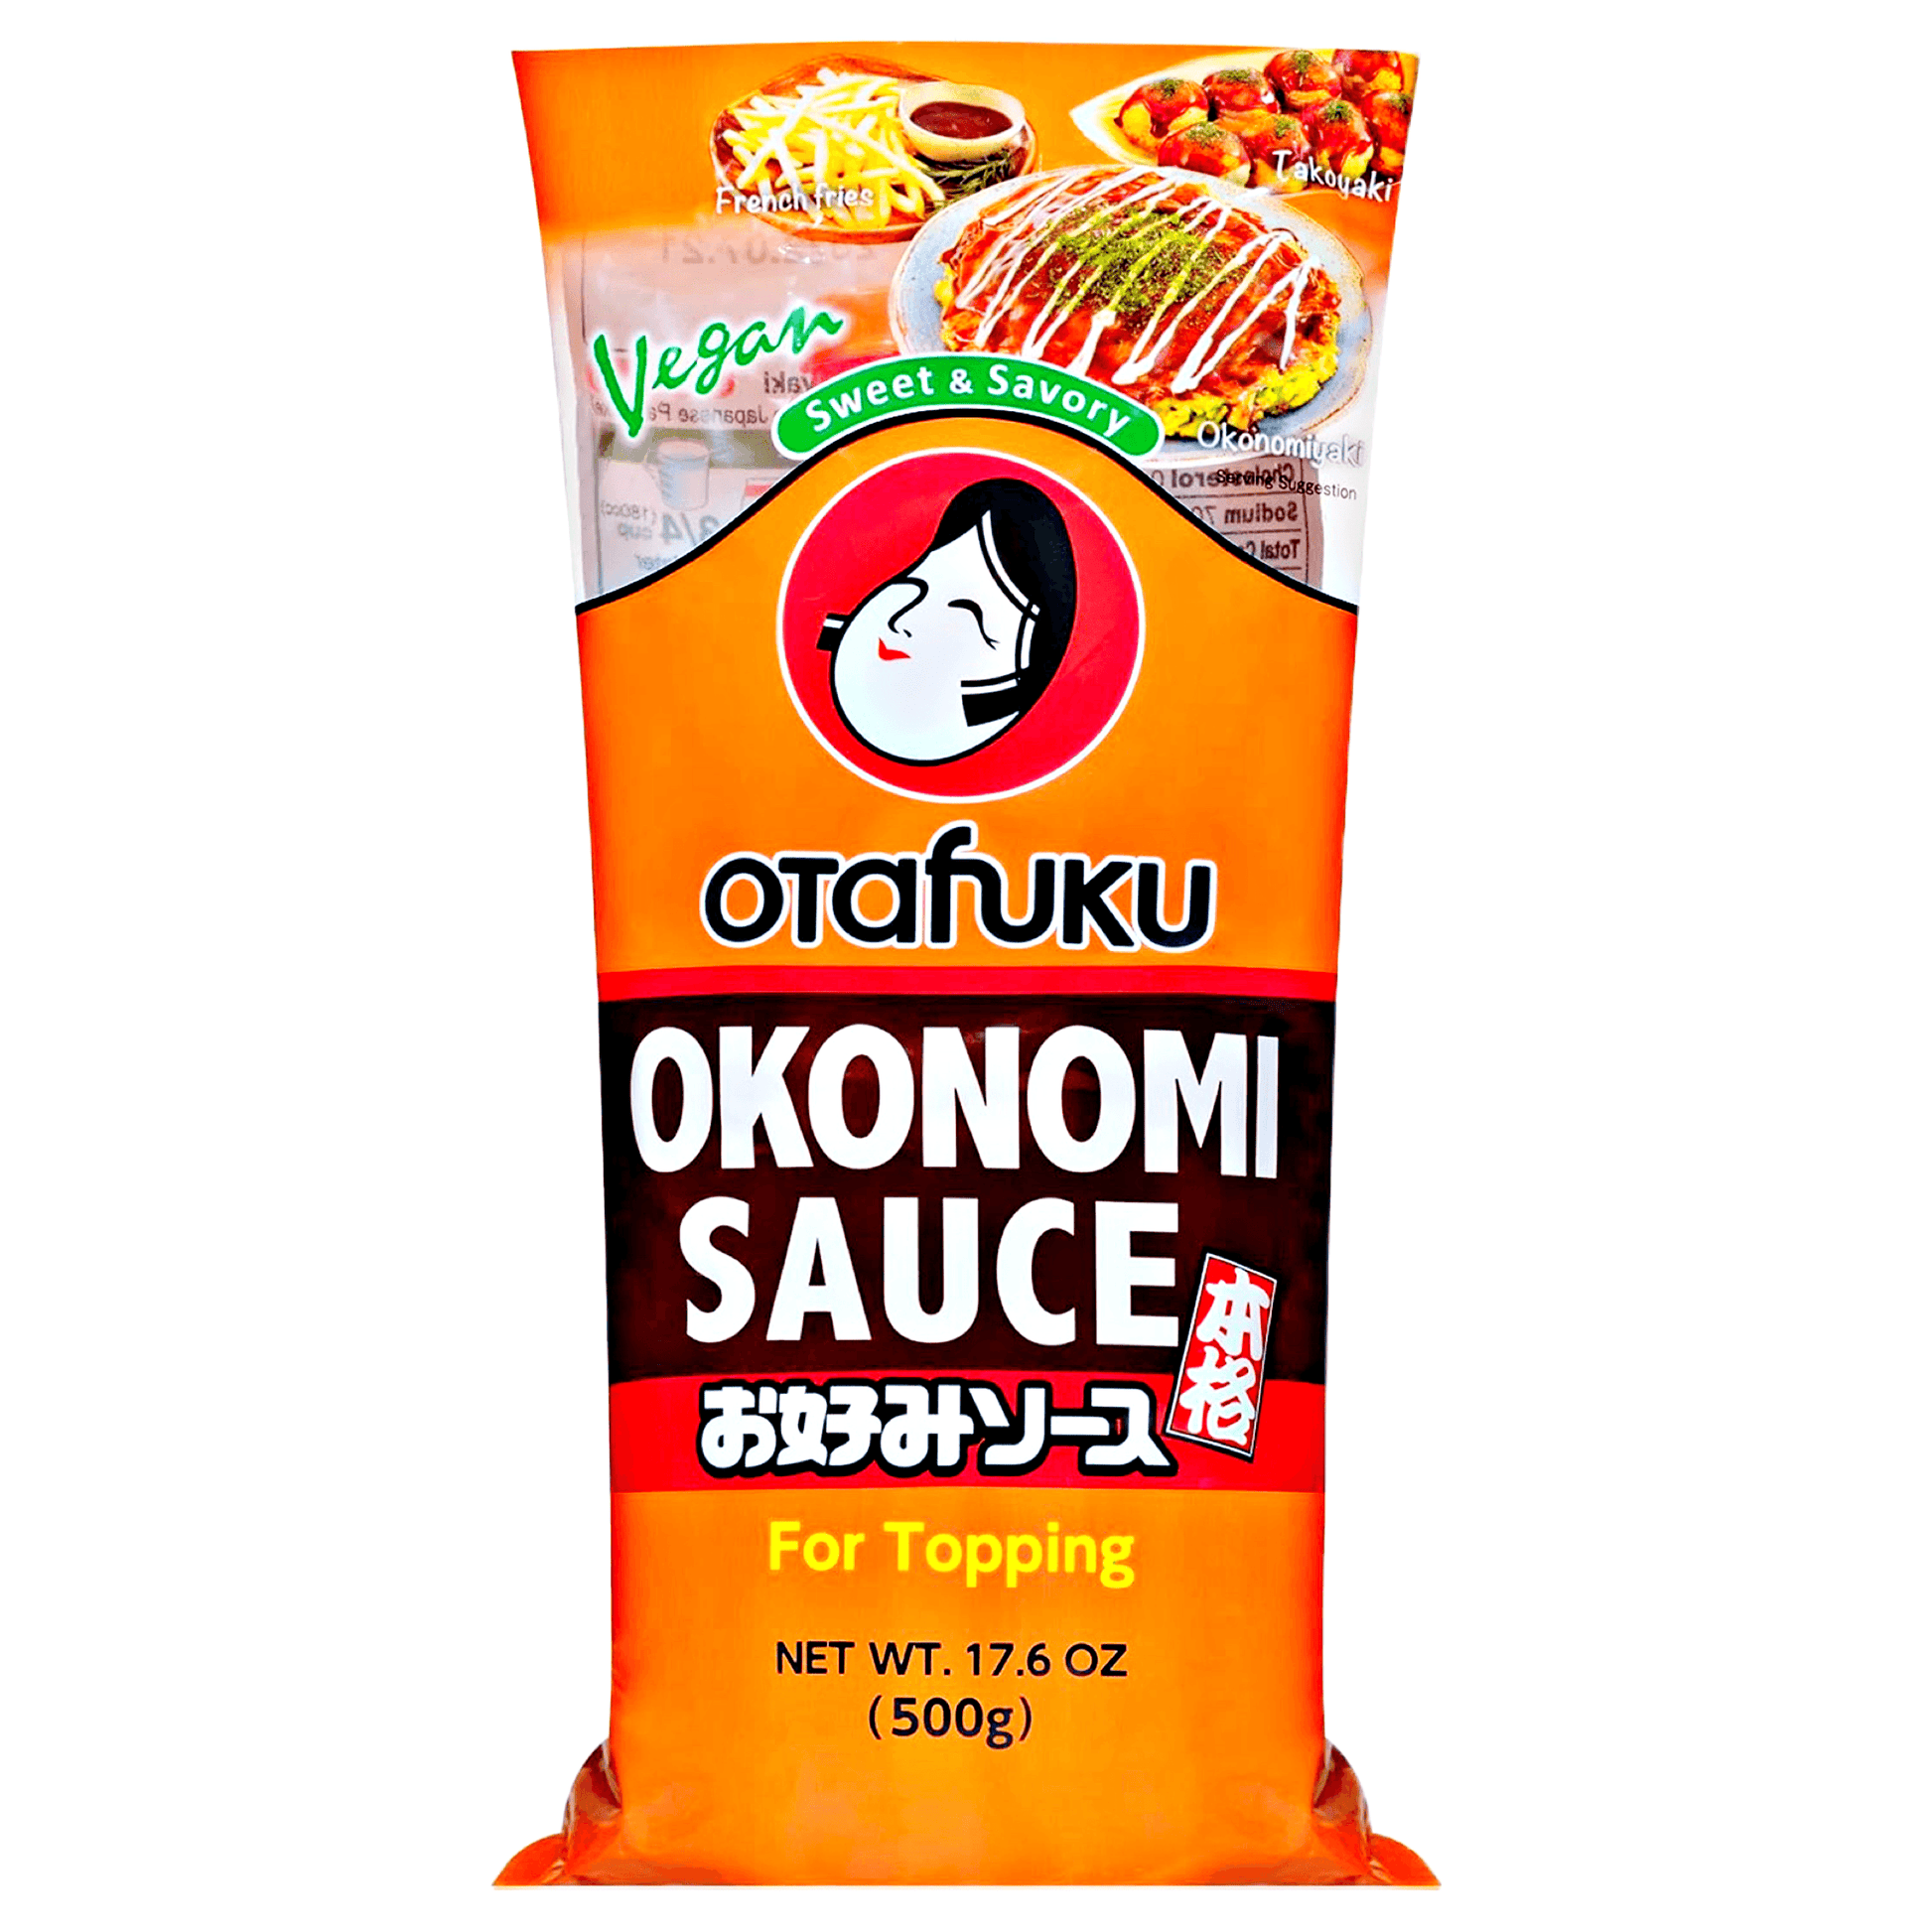 Otafuku Okonomi Sauce 500g - The Snacks Box - Asian Snacks Store - The Snacks Box - Korean Snack - Japanese Snack